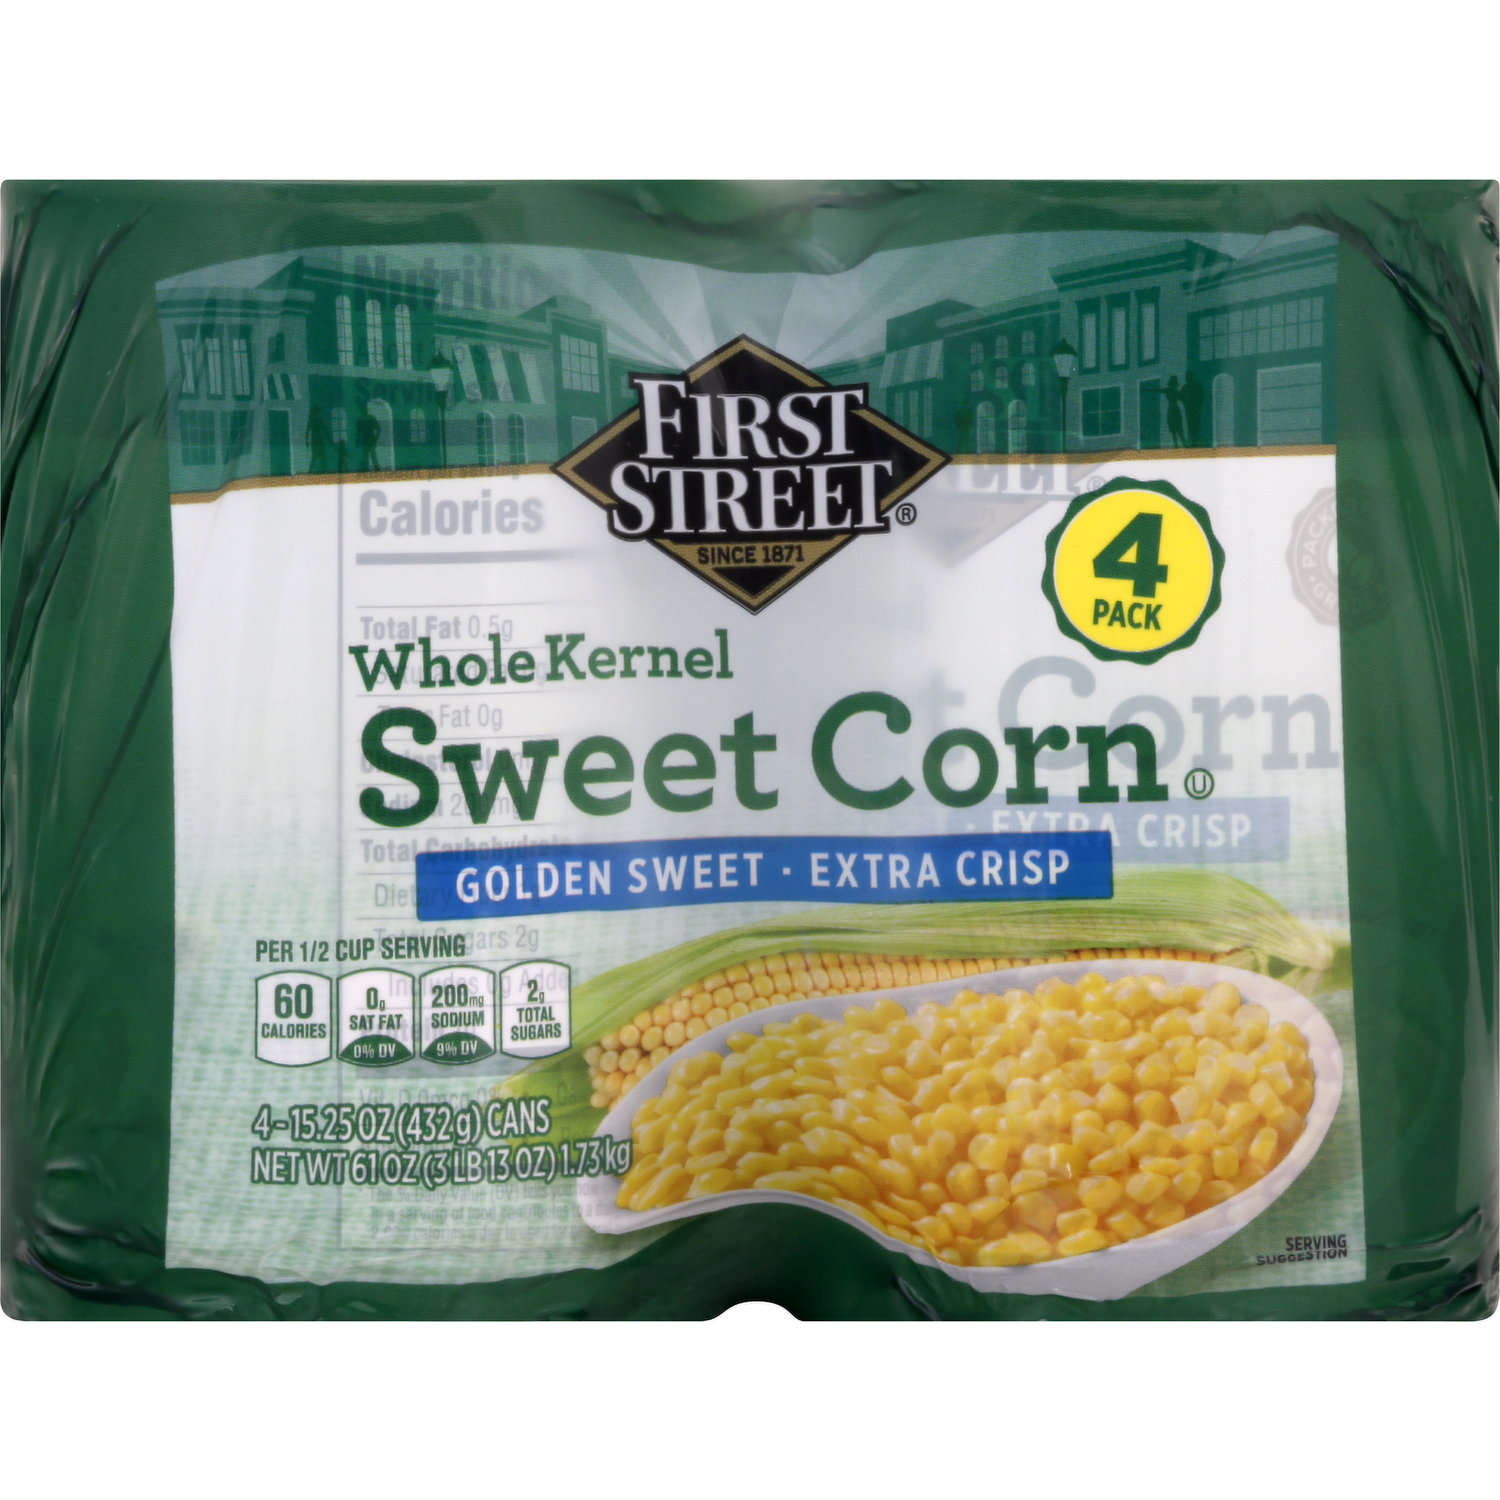 First Street Sweet Corn, Whole Kernel, 4 Pack - Smart & Final